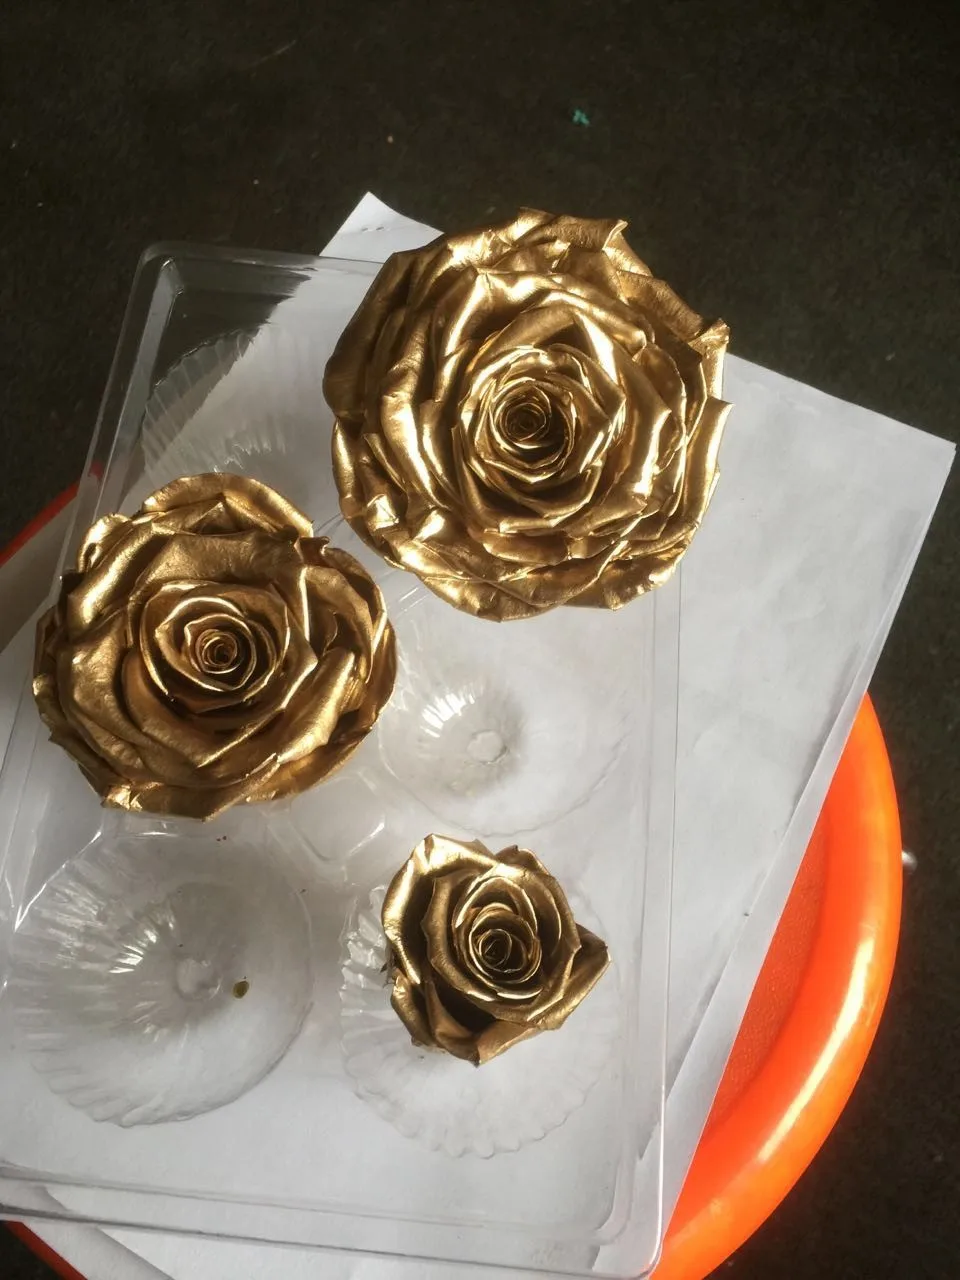 Tahan Lama 2 Tahun Mawar Grosir Diawetkan Mawar Emas Bunga Emas Buy Golden Rose Tahun Mawar Grosir Grosir Diawetkan Product On Alibaba Com